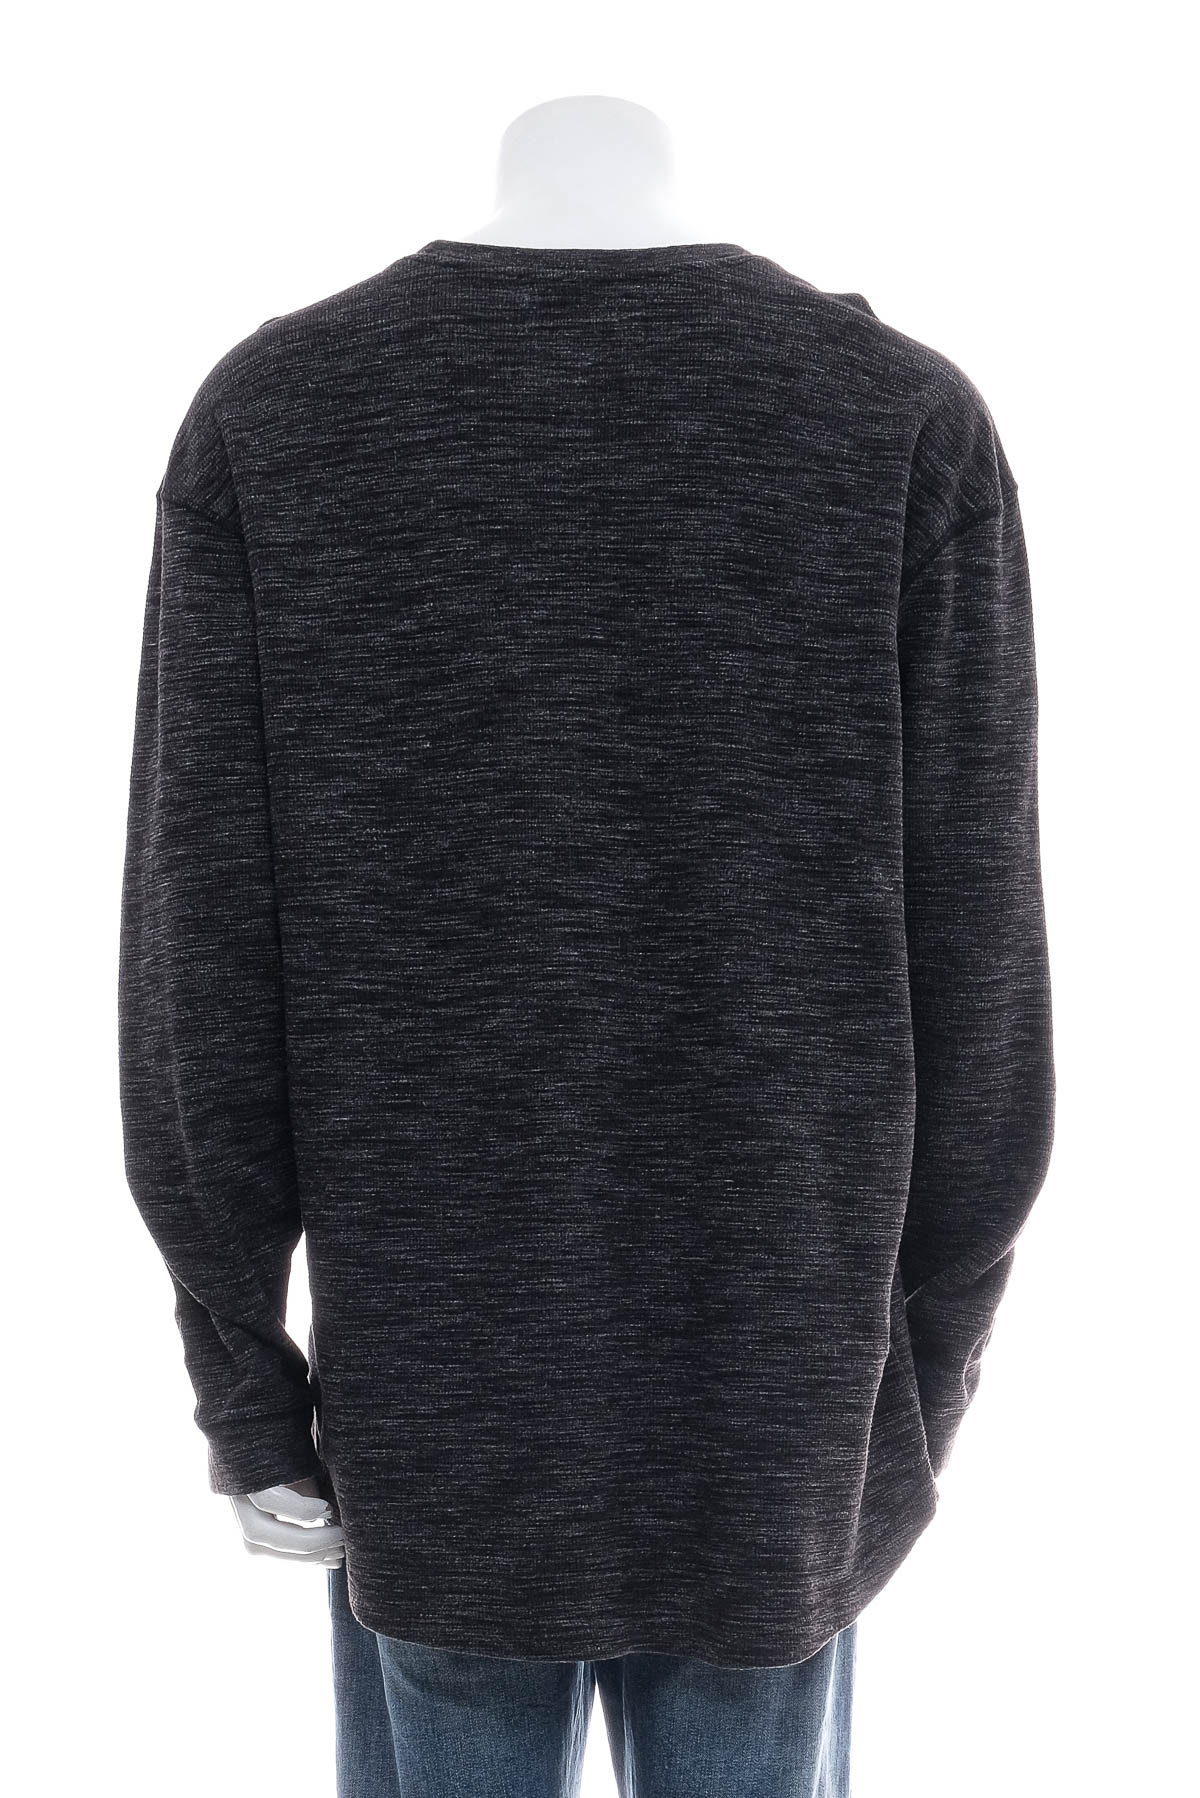 Men's sweater - CSG - 1